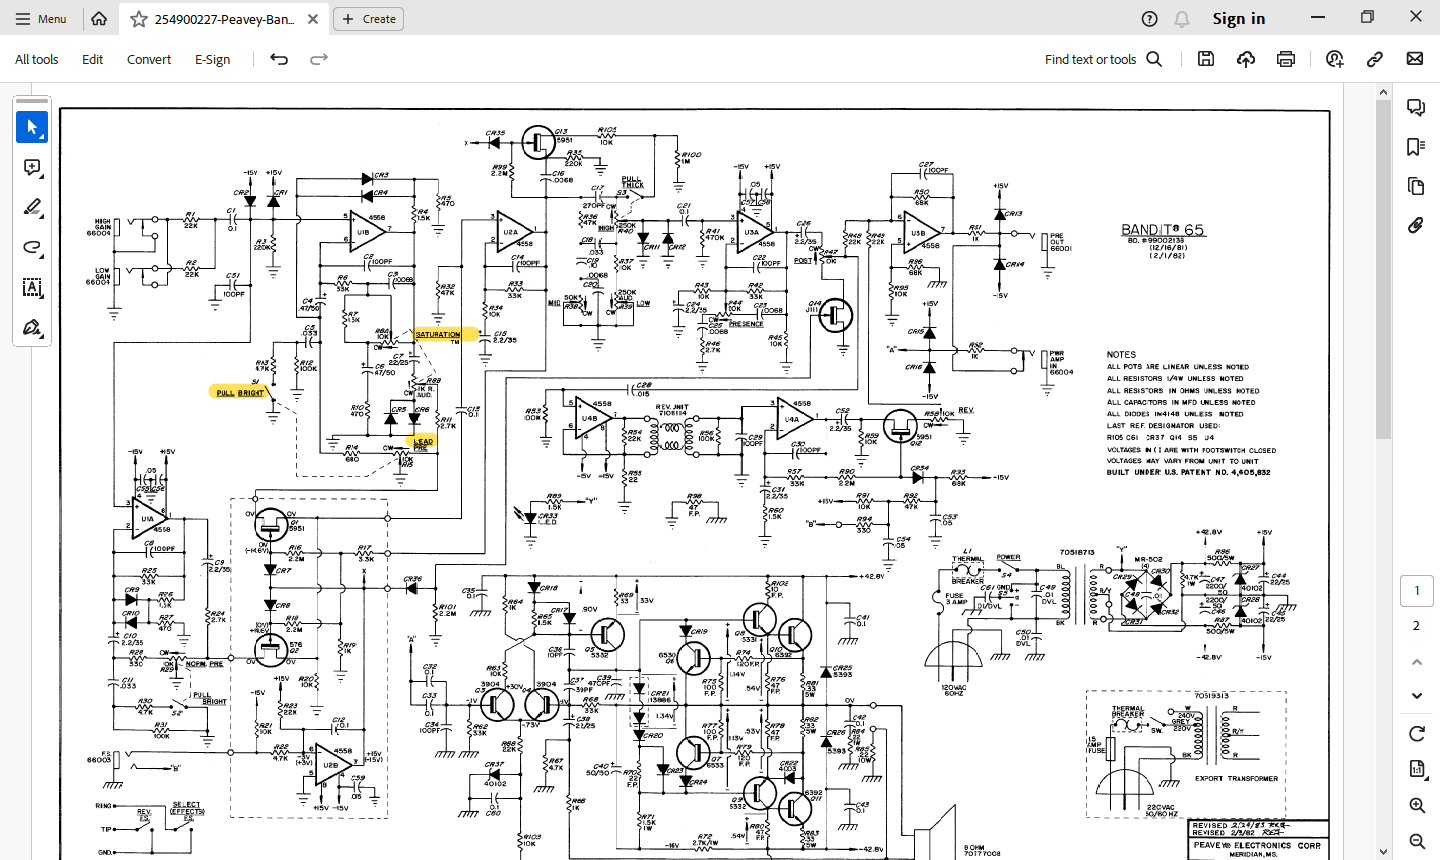 254900227-Peavey-Bandit-65-schematic.pdf - Adobe Acrobat Reader (64-bit) 3_27_2024 12_52_44 PM.png